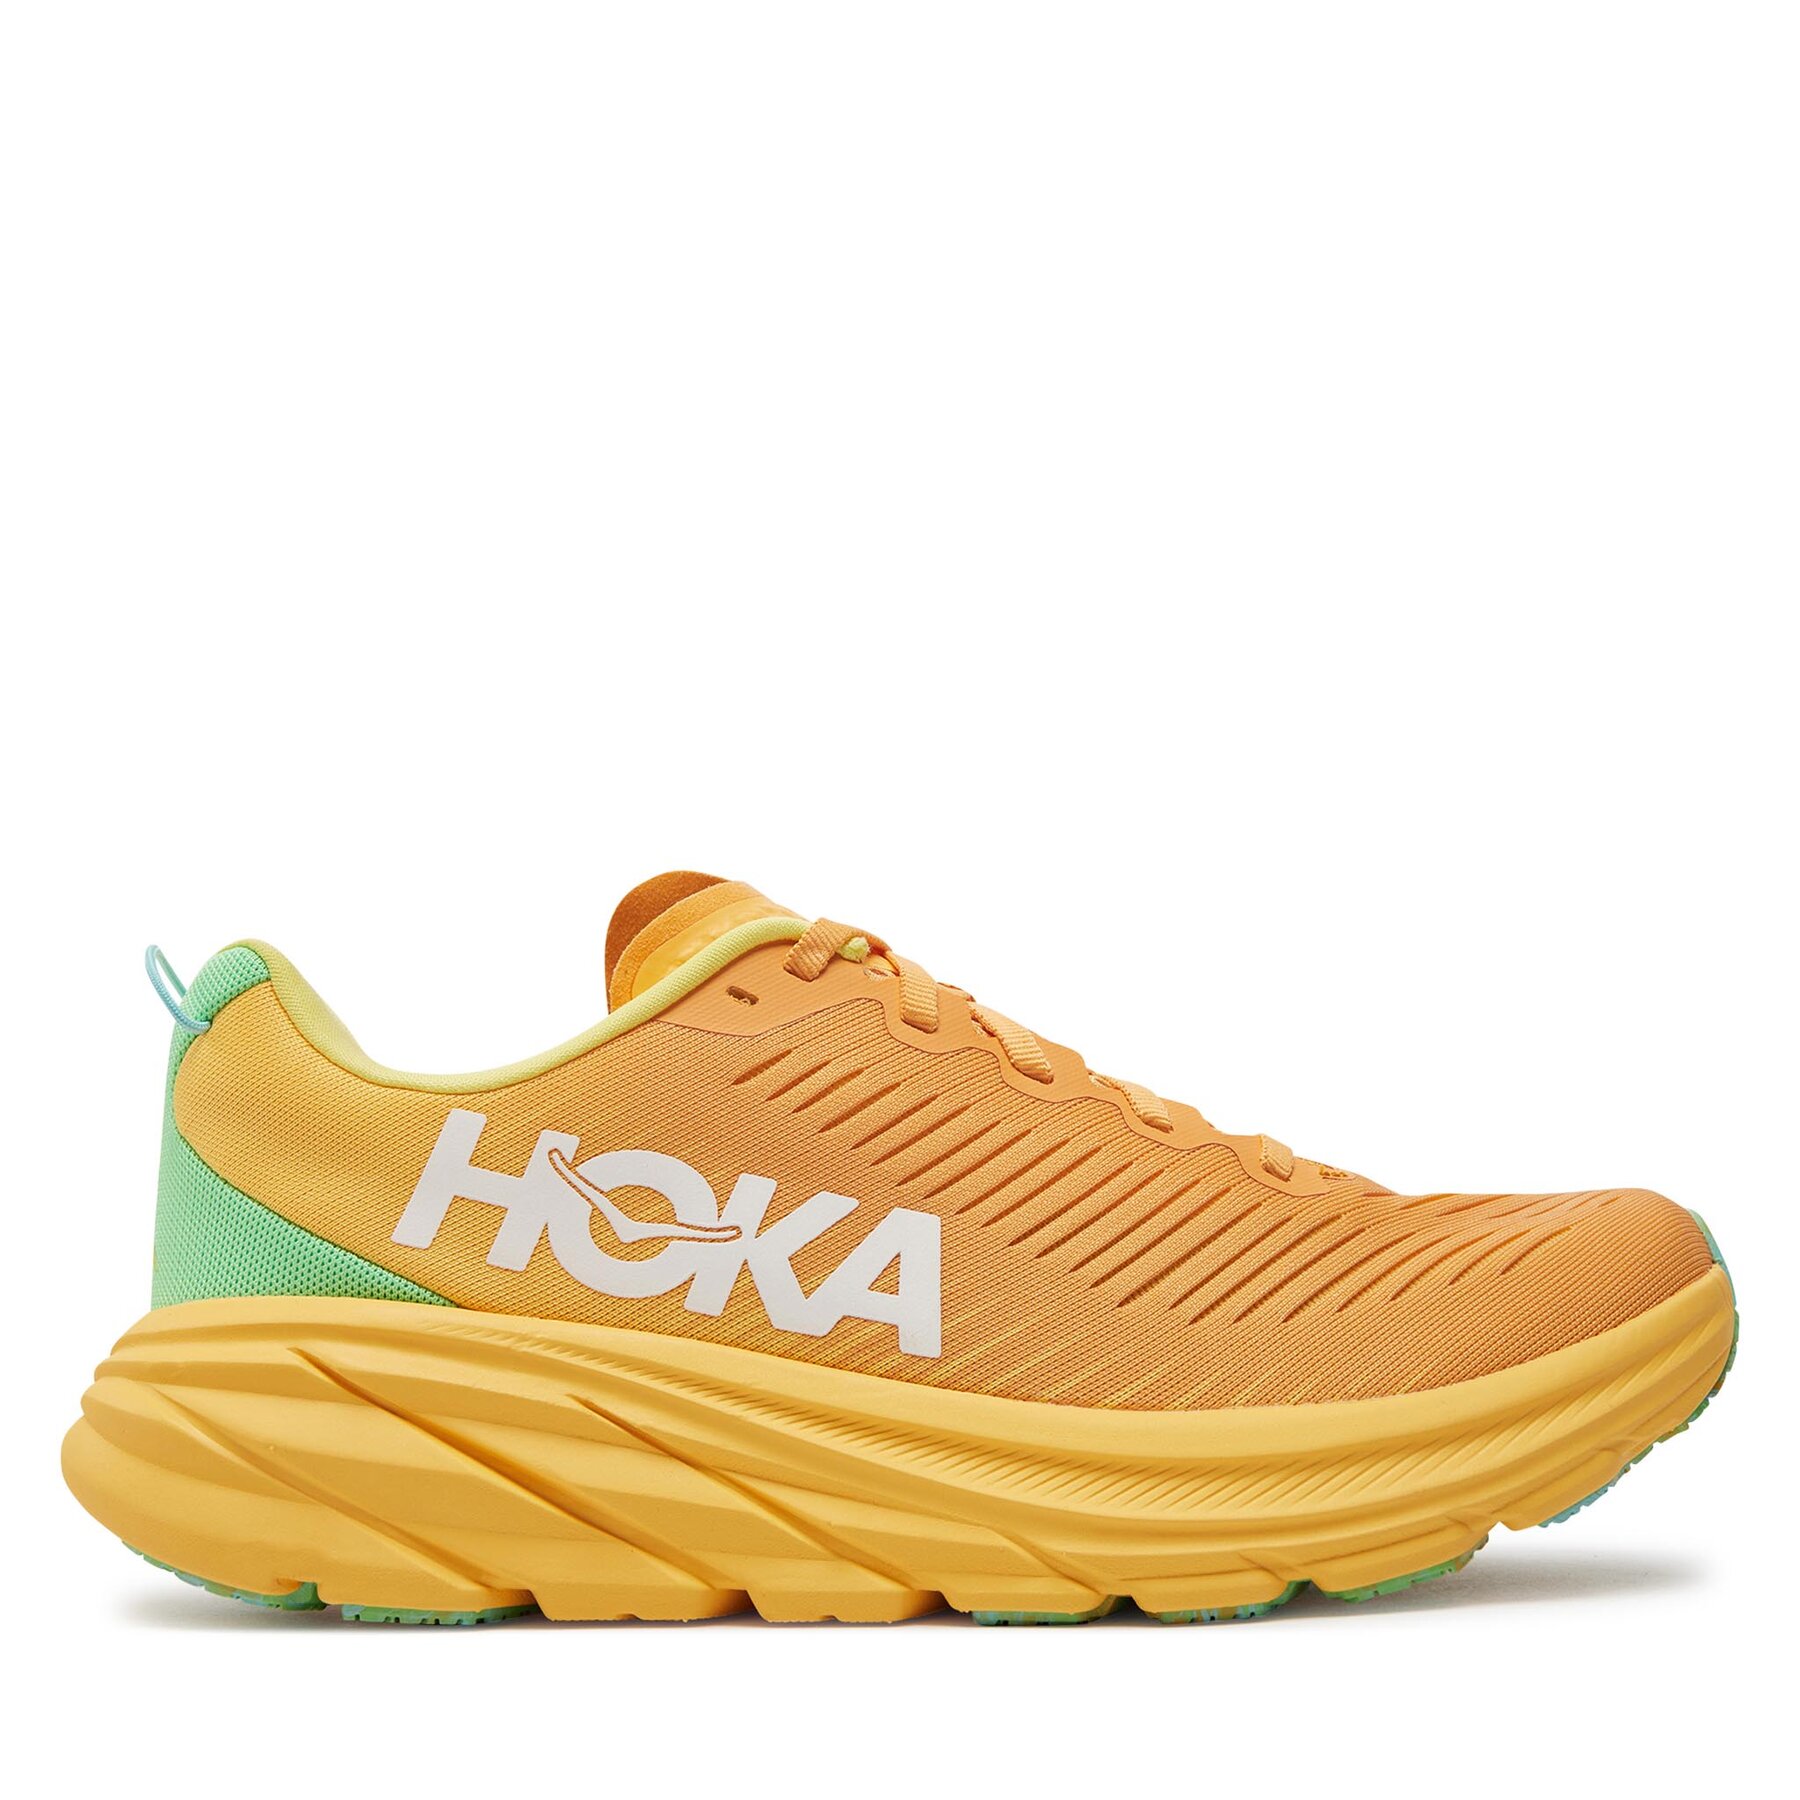 Schuhe Hoka Rincon 3 1119395 SPY von HOKA